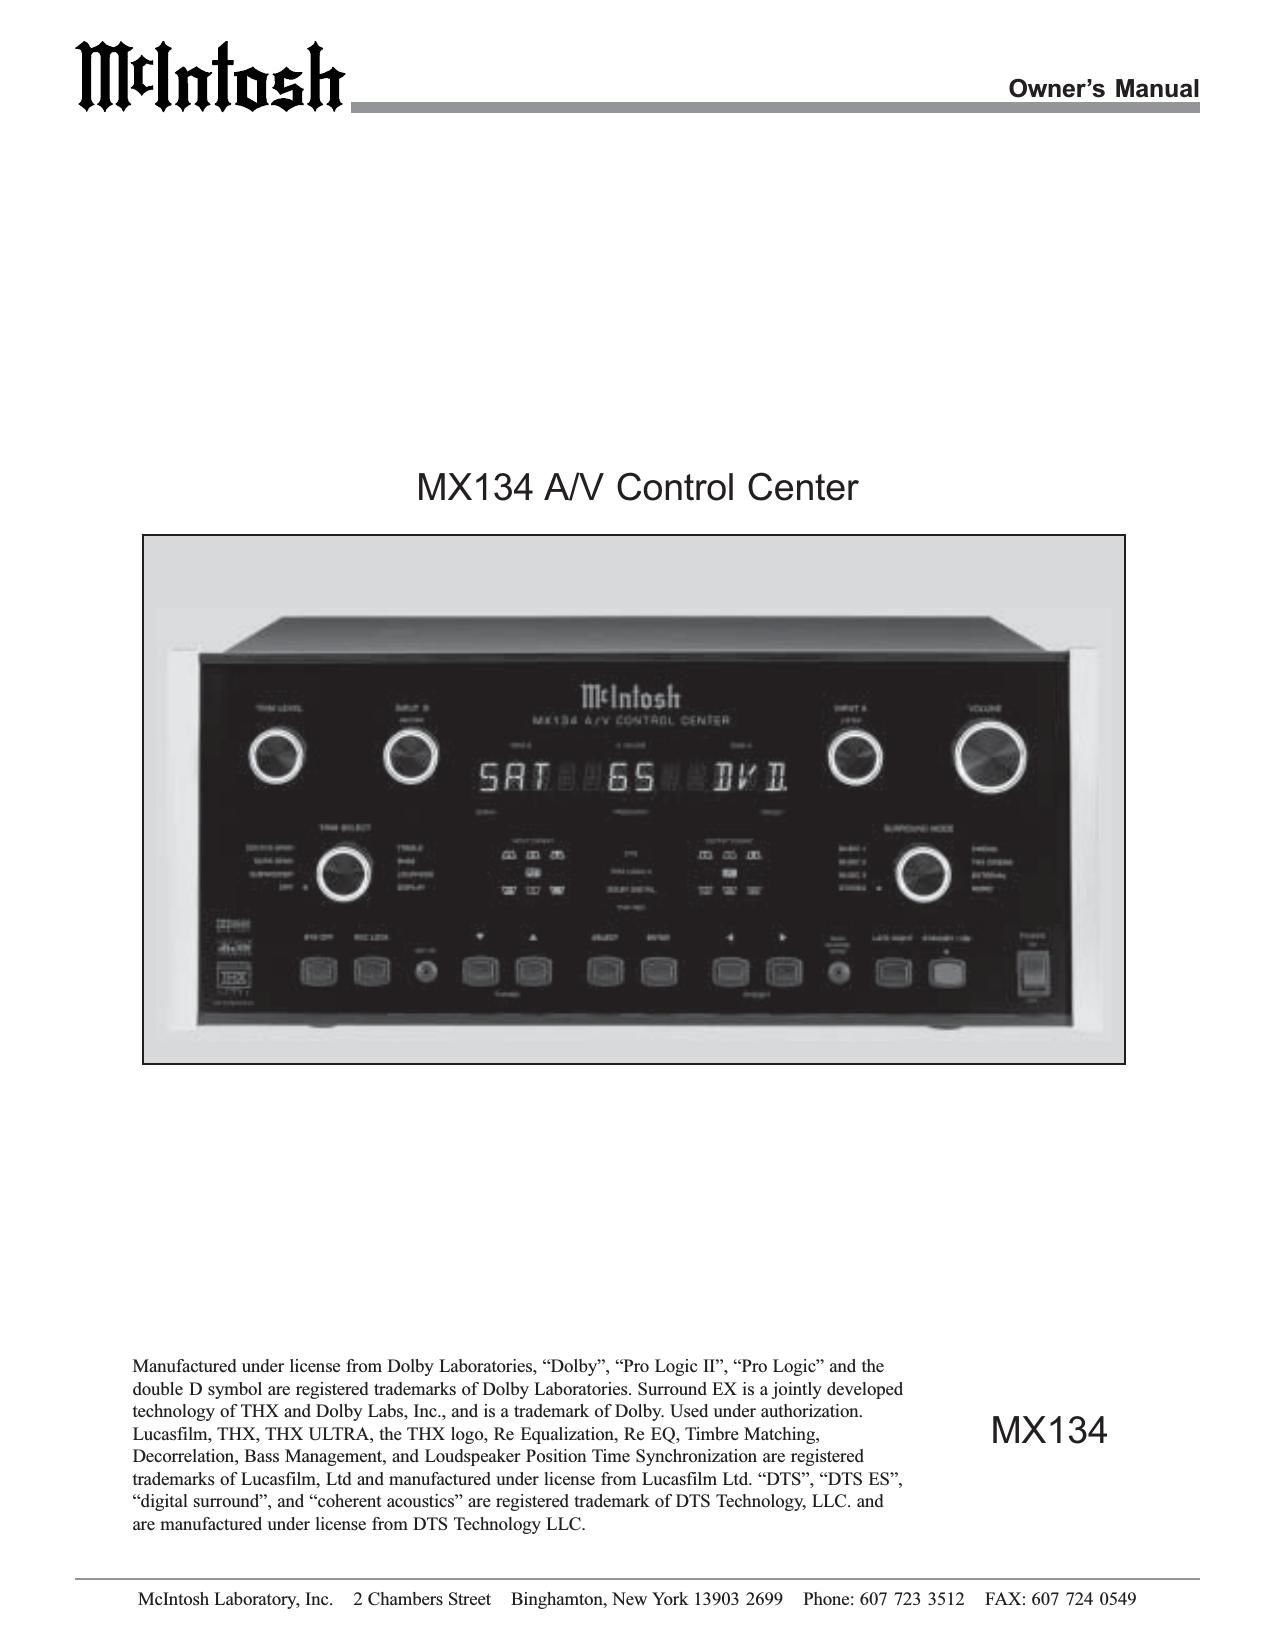 McIntosh MX 134 Owners Manual